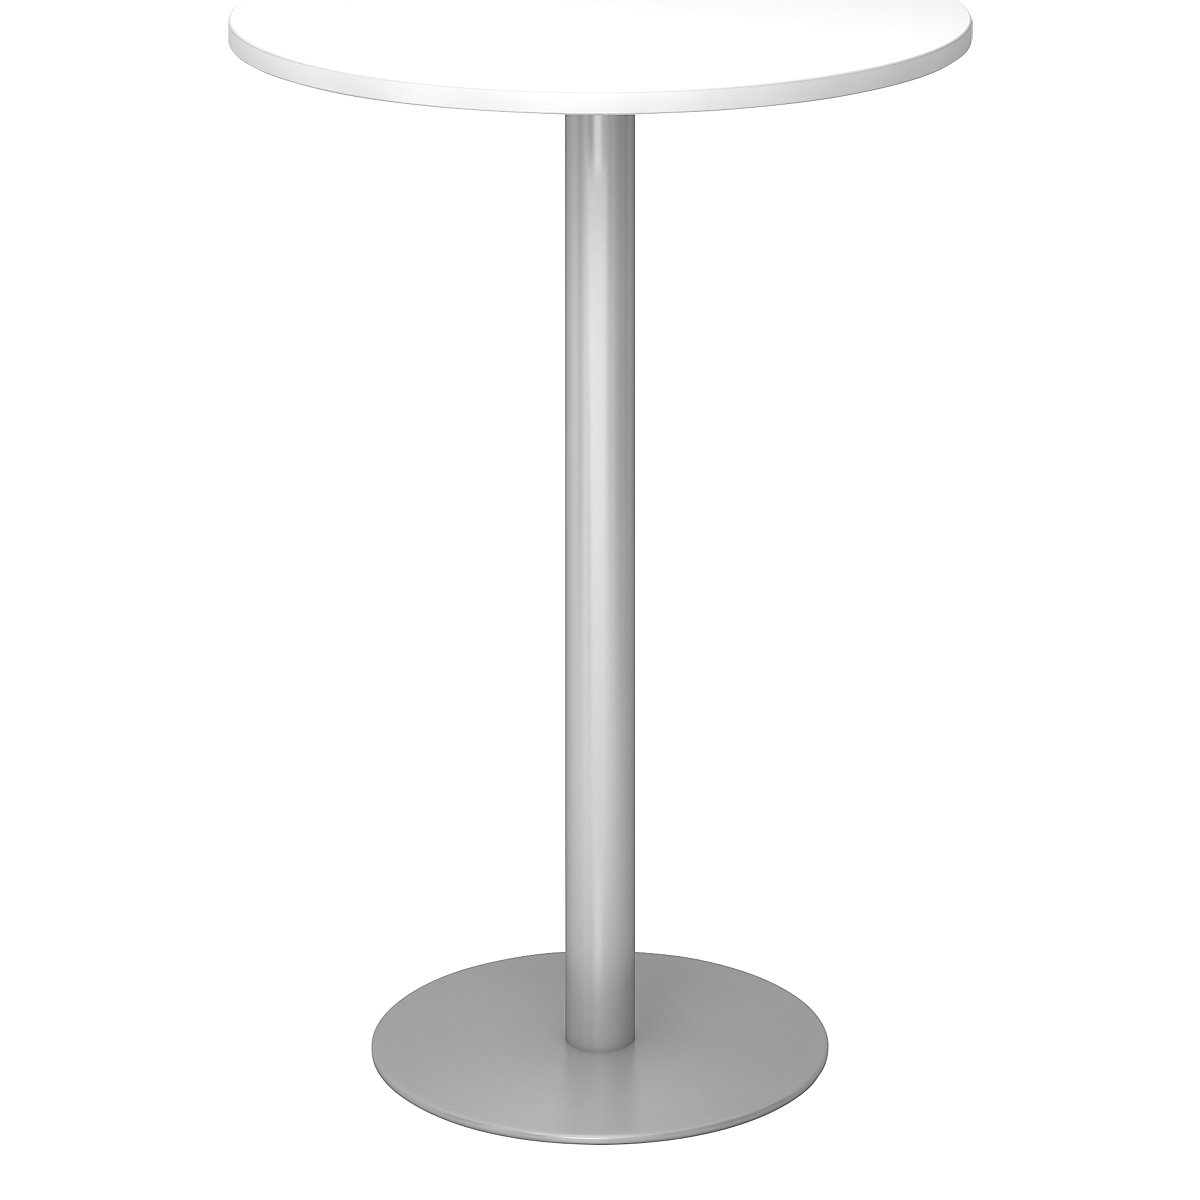 Barový stůl, Ø 800 mm, výška 1116 mm, stříbrný podstavec, deska bílá